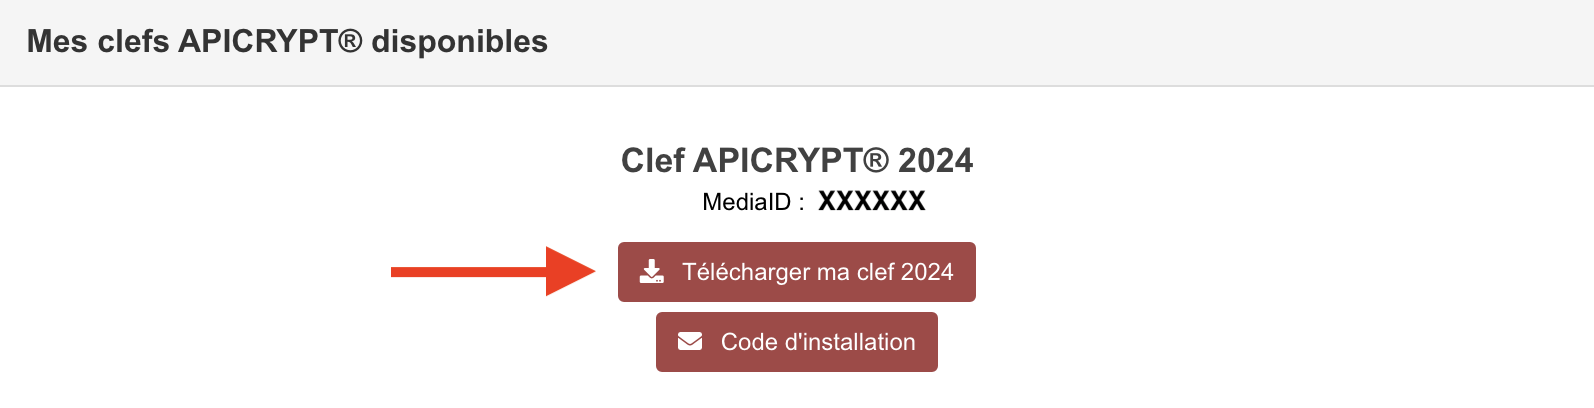 02 - Clef APICRYPT